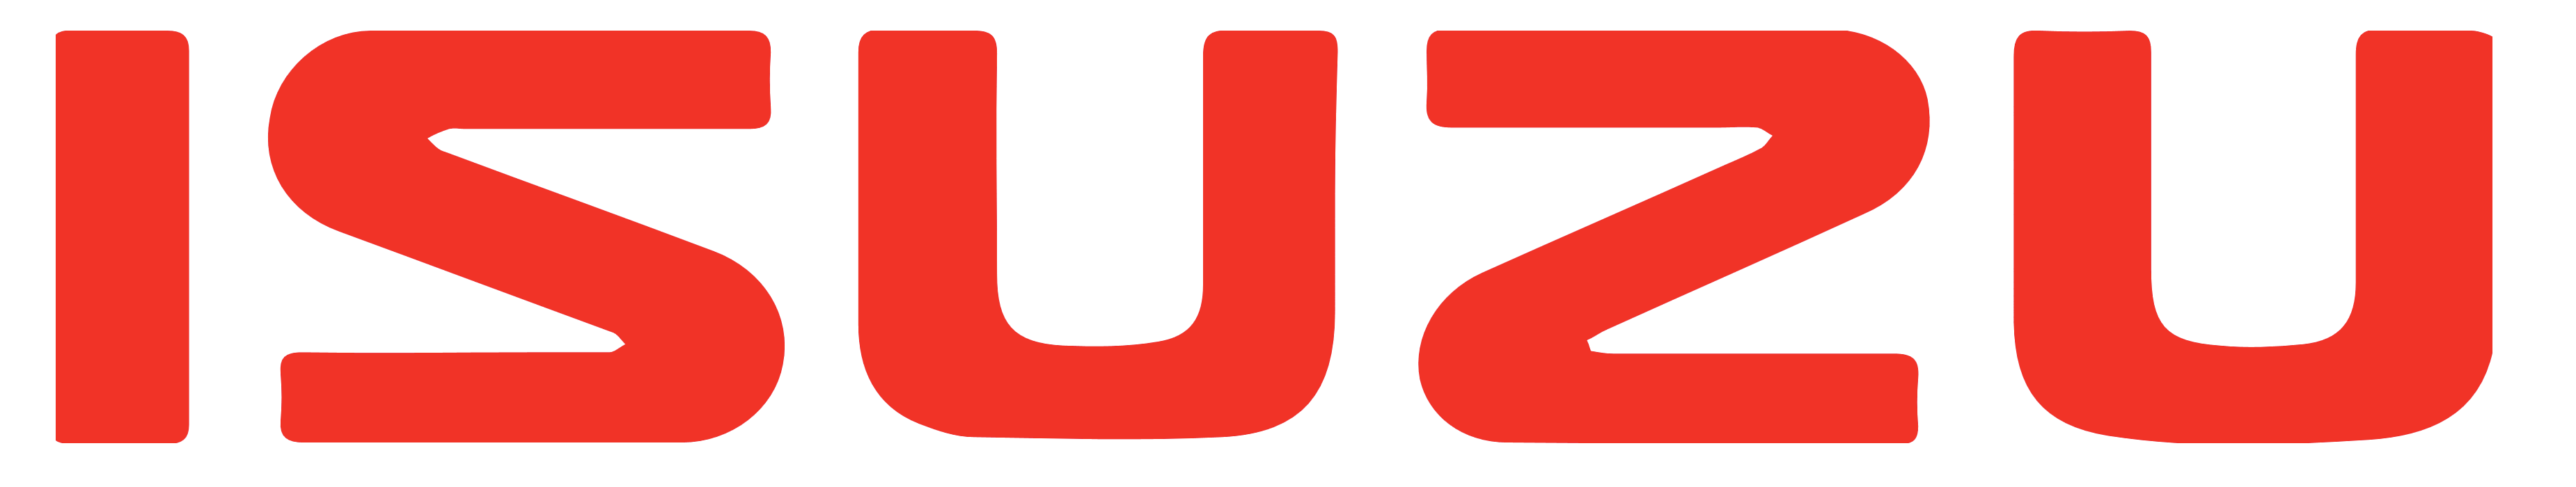 Isuzu logo, logotype